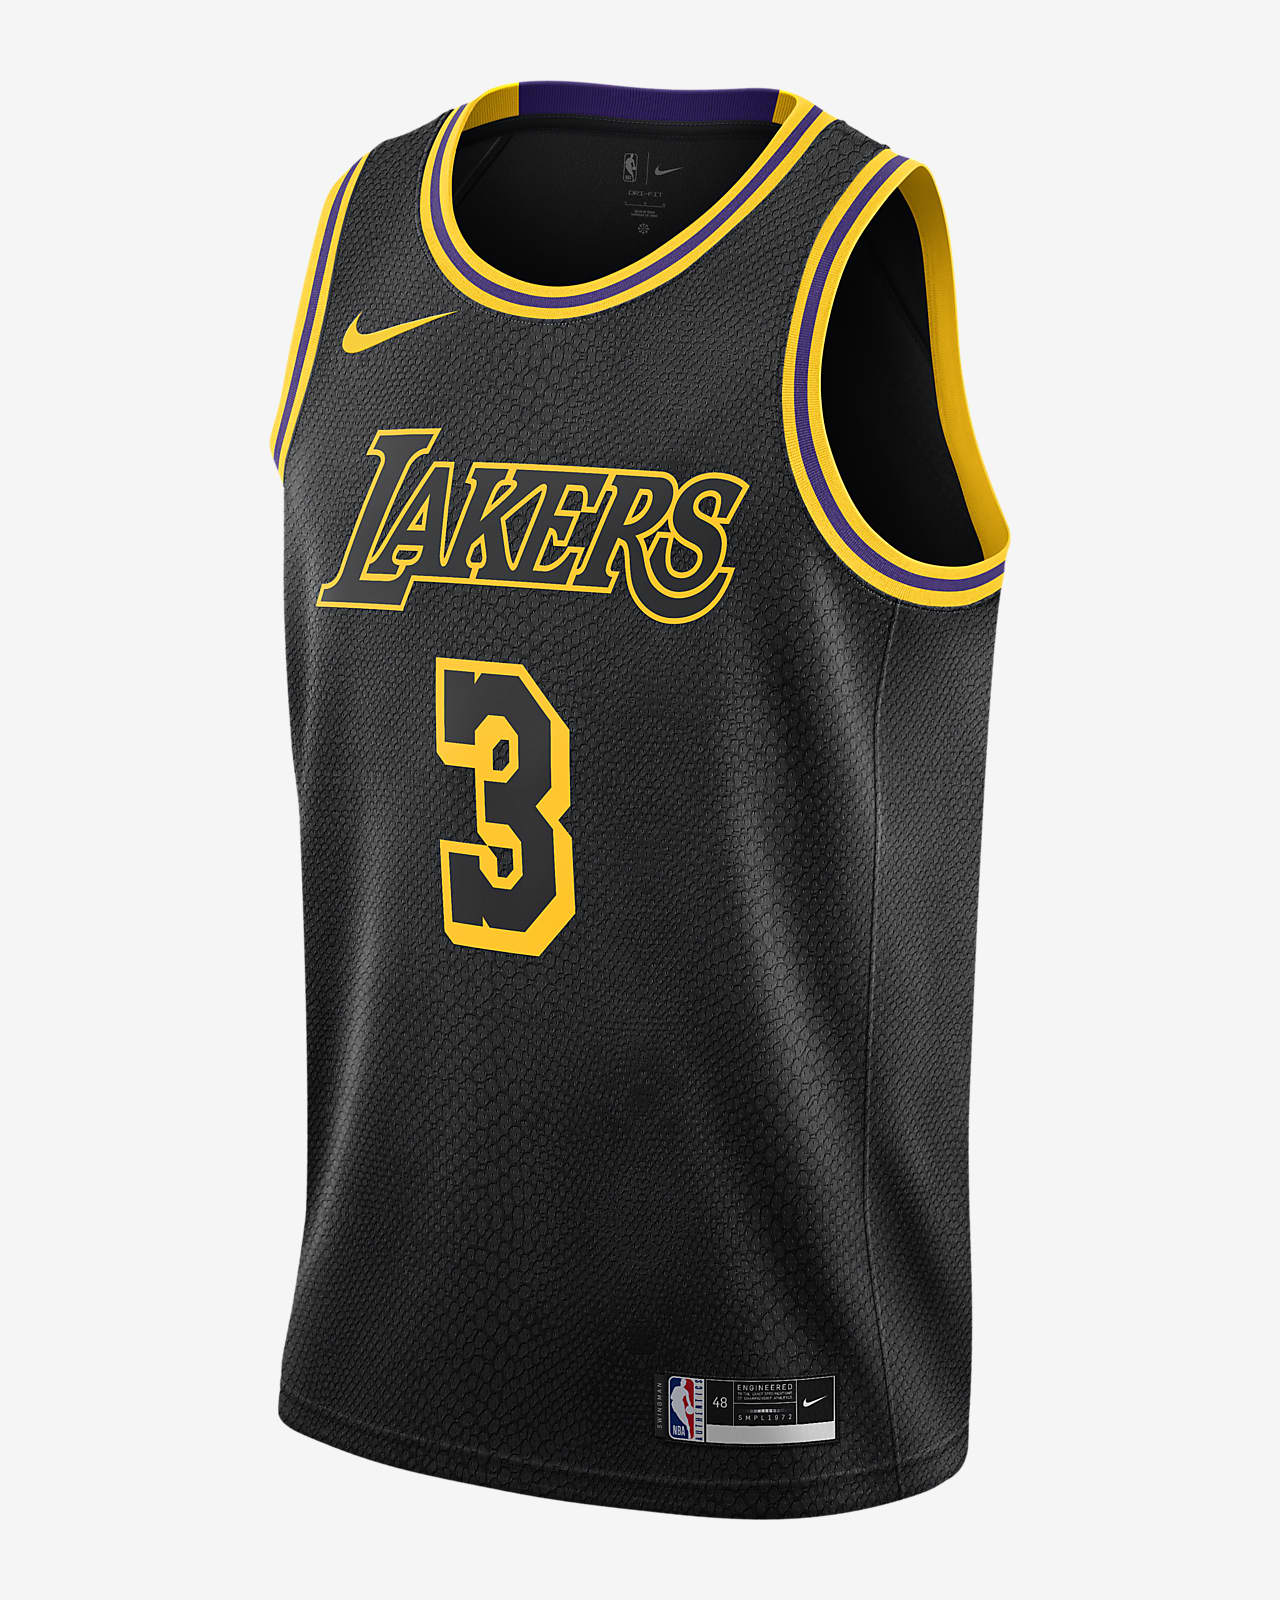 Anthony Davis Lakers Nike NBA Swingman Jersey